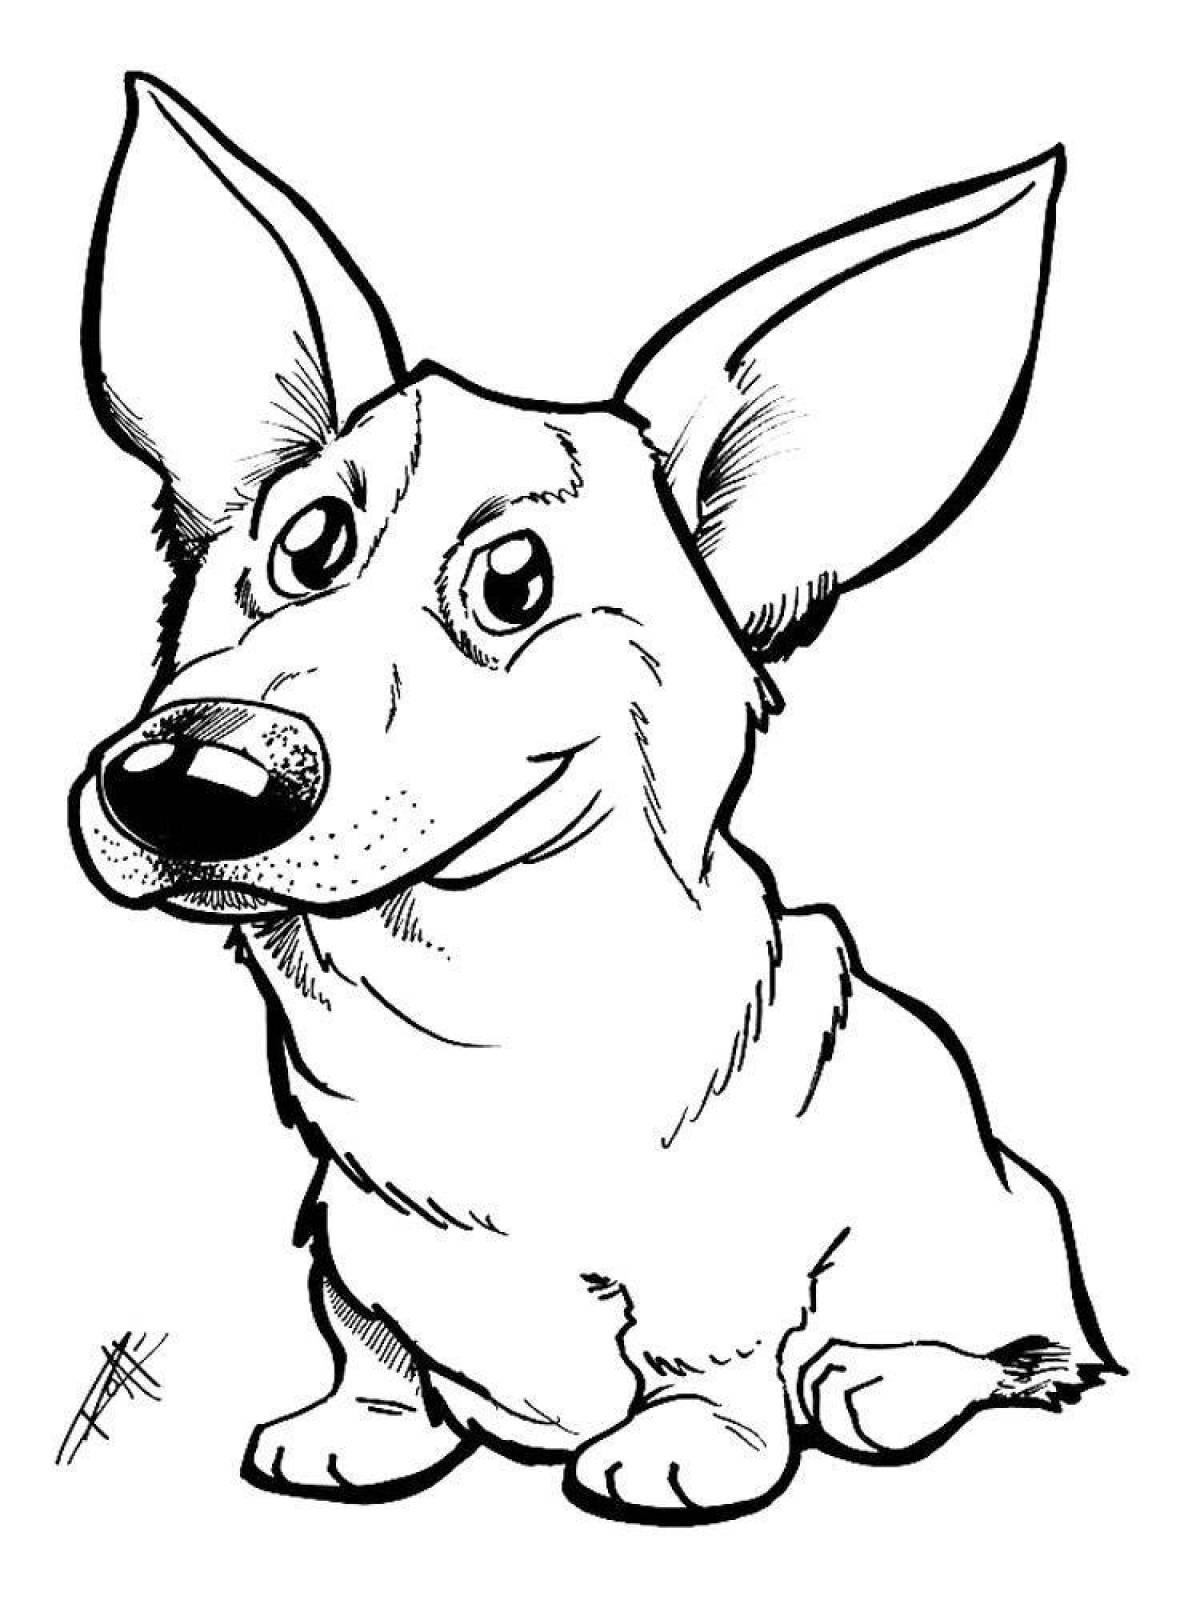 Coloring book brave corgi dog